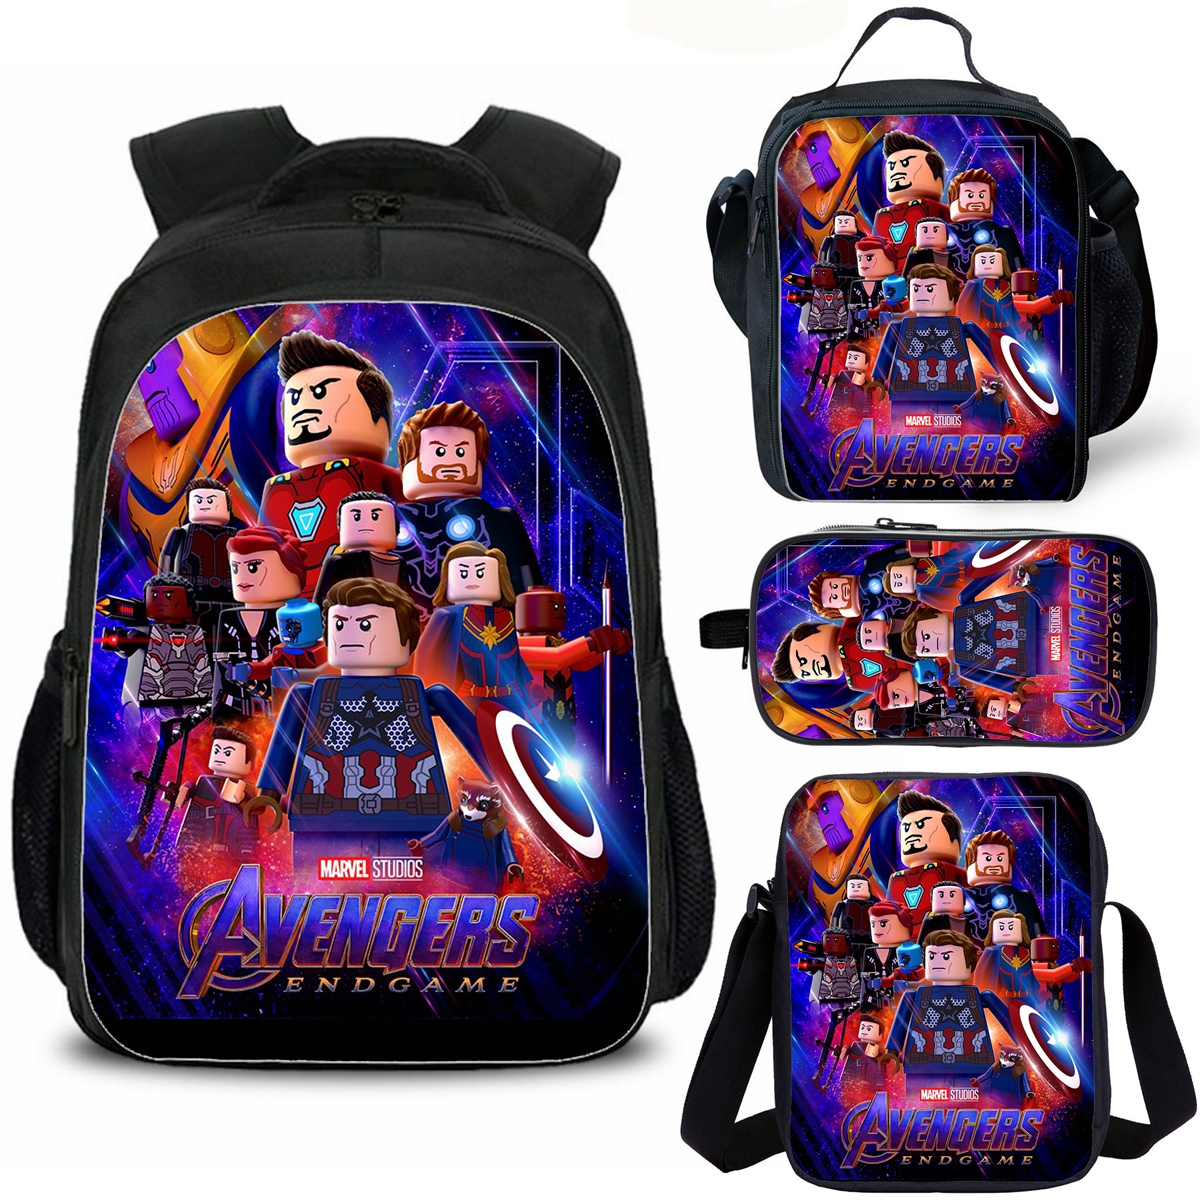 Avengers Endgame Kids Backpack Lunch Bag Shoulder Bag Pencil Case Cute School Merch